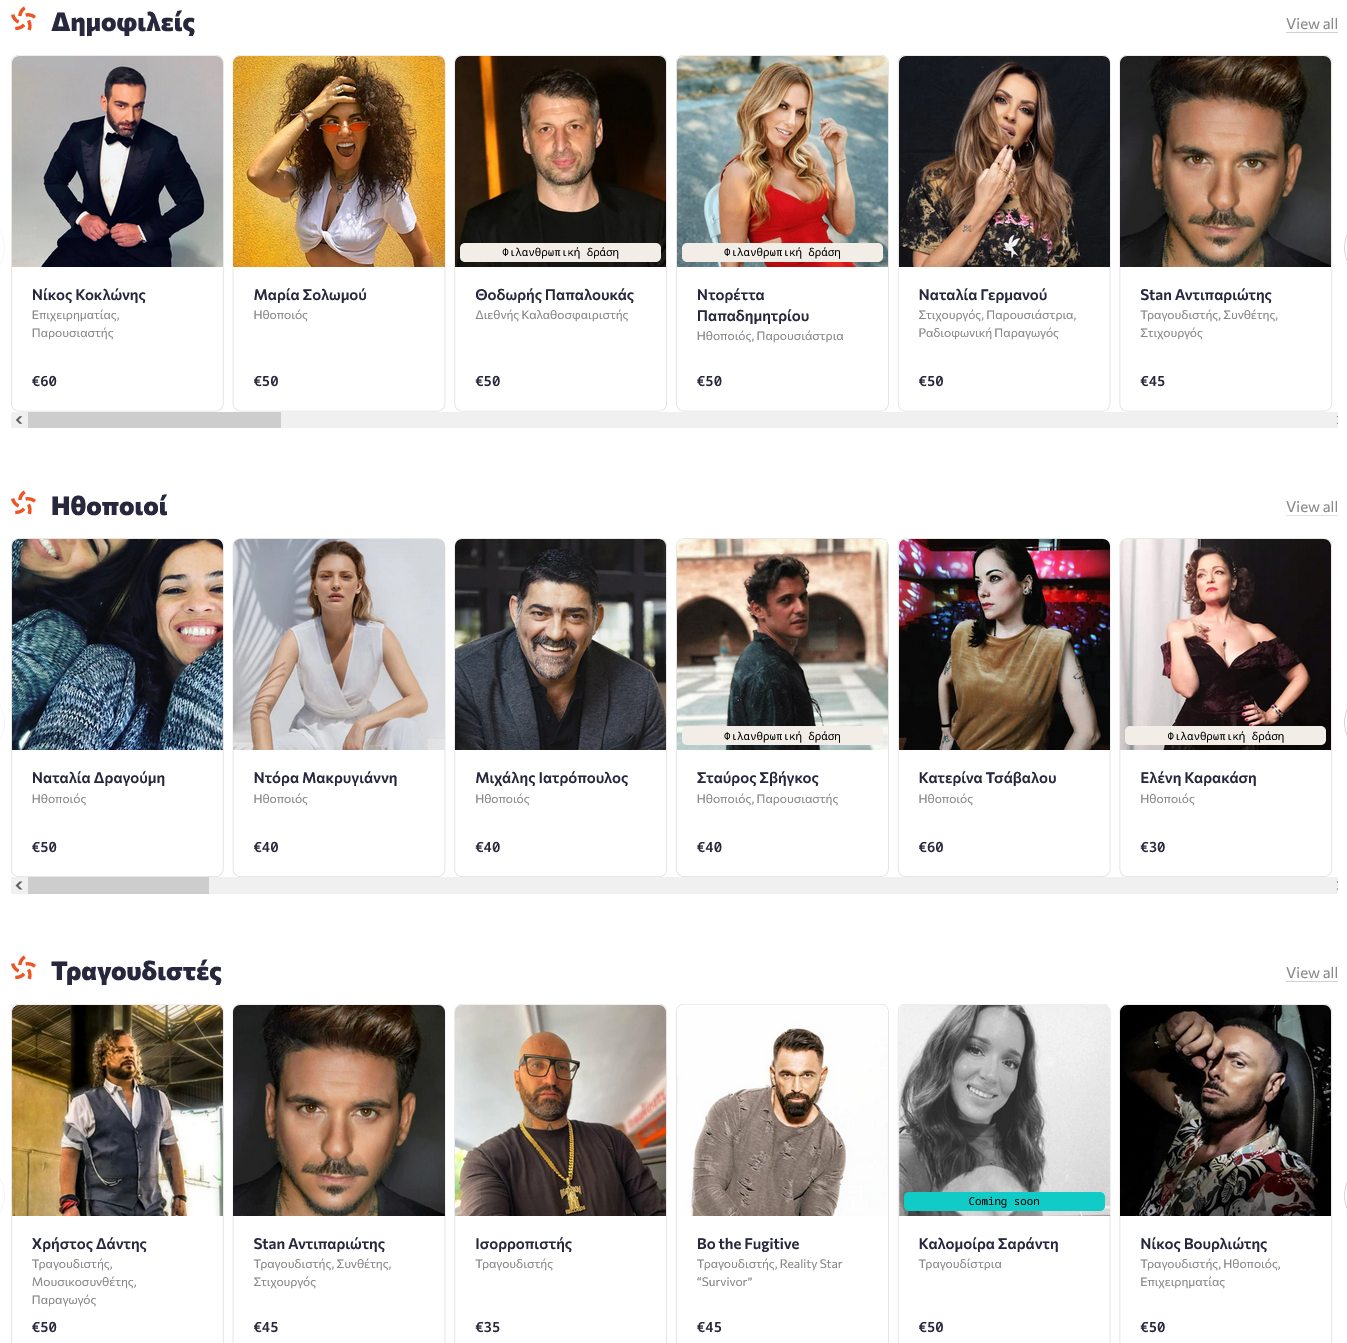 Stargram: Η νέα πλατφόρμα όπου «νοικιάζεις» Έλληνες celebrities να στείλουν ευχές